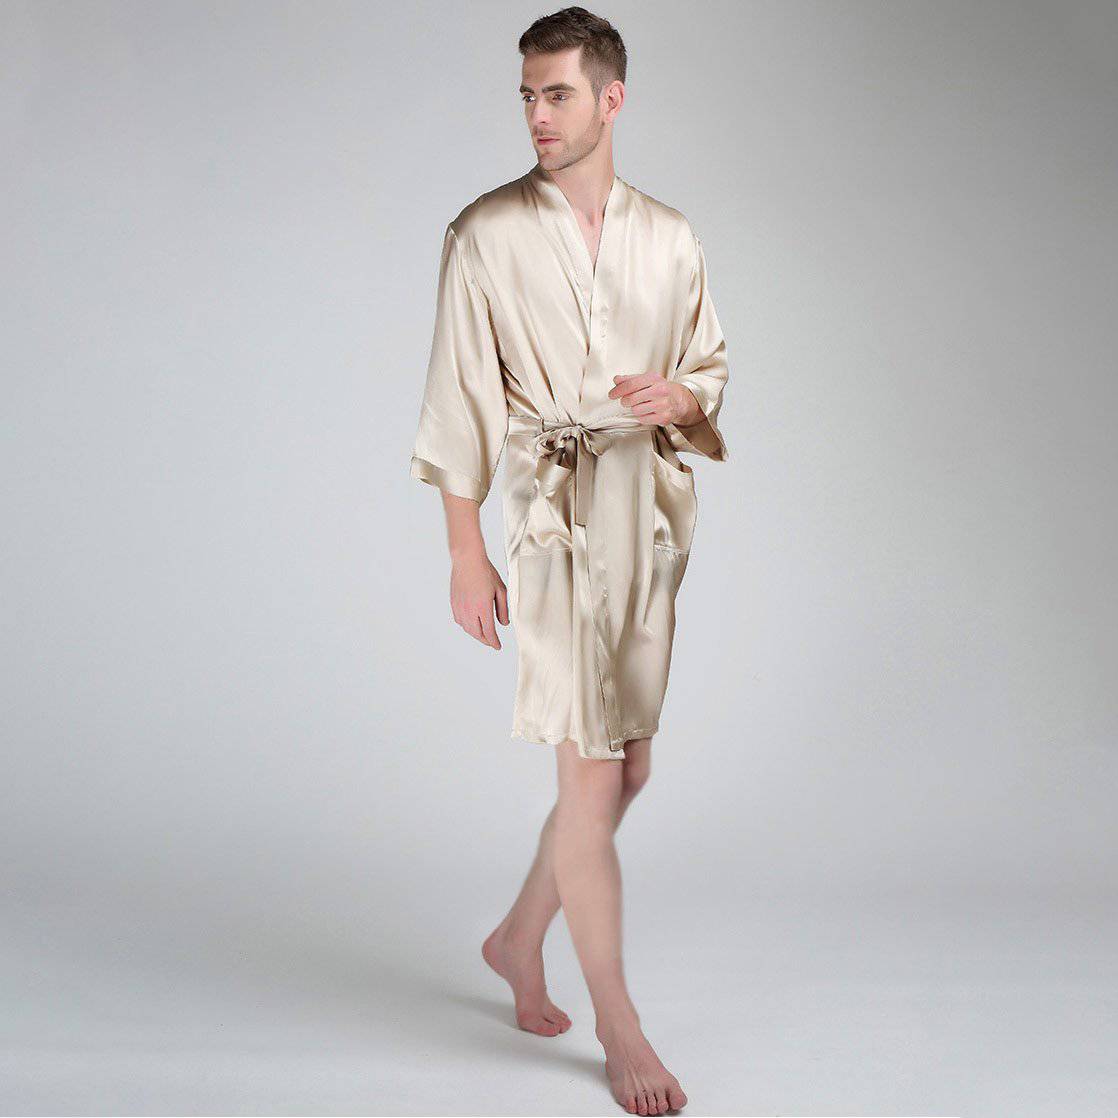 Mens Satin Silky Two-Tone Kimono Robe With Pockets, KÂfemme